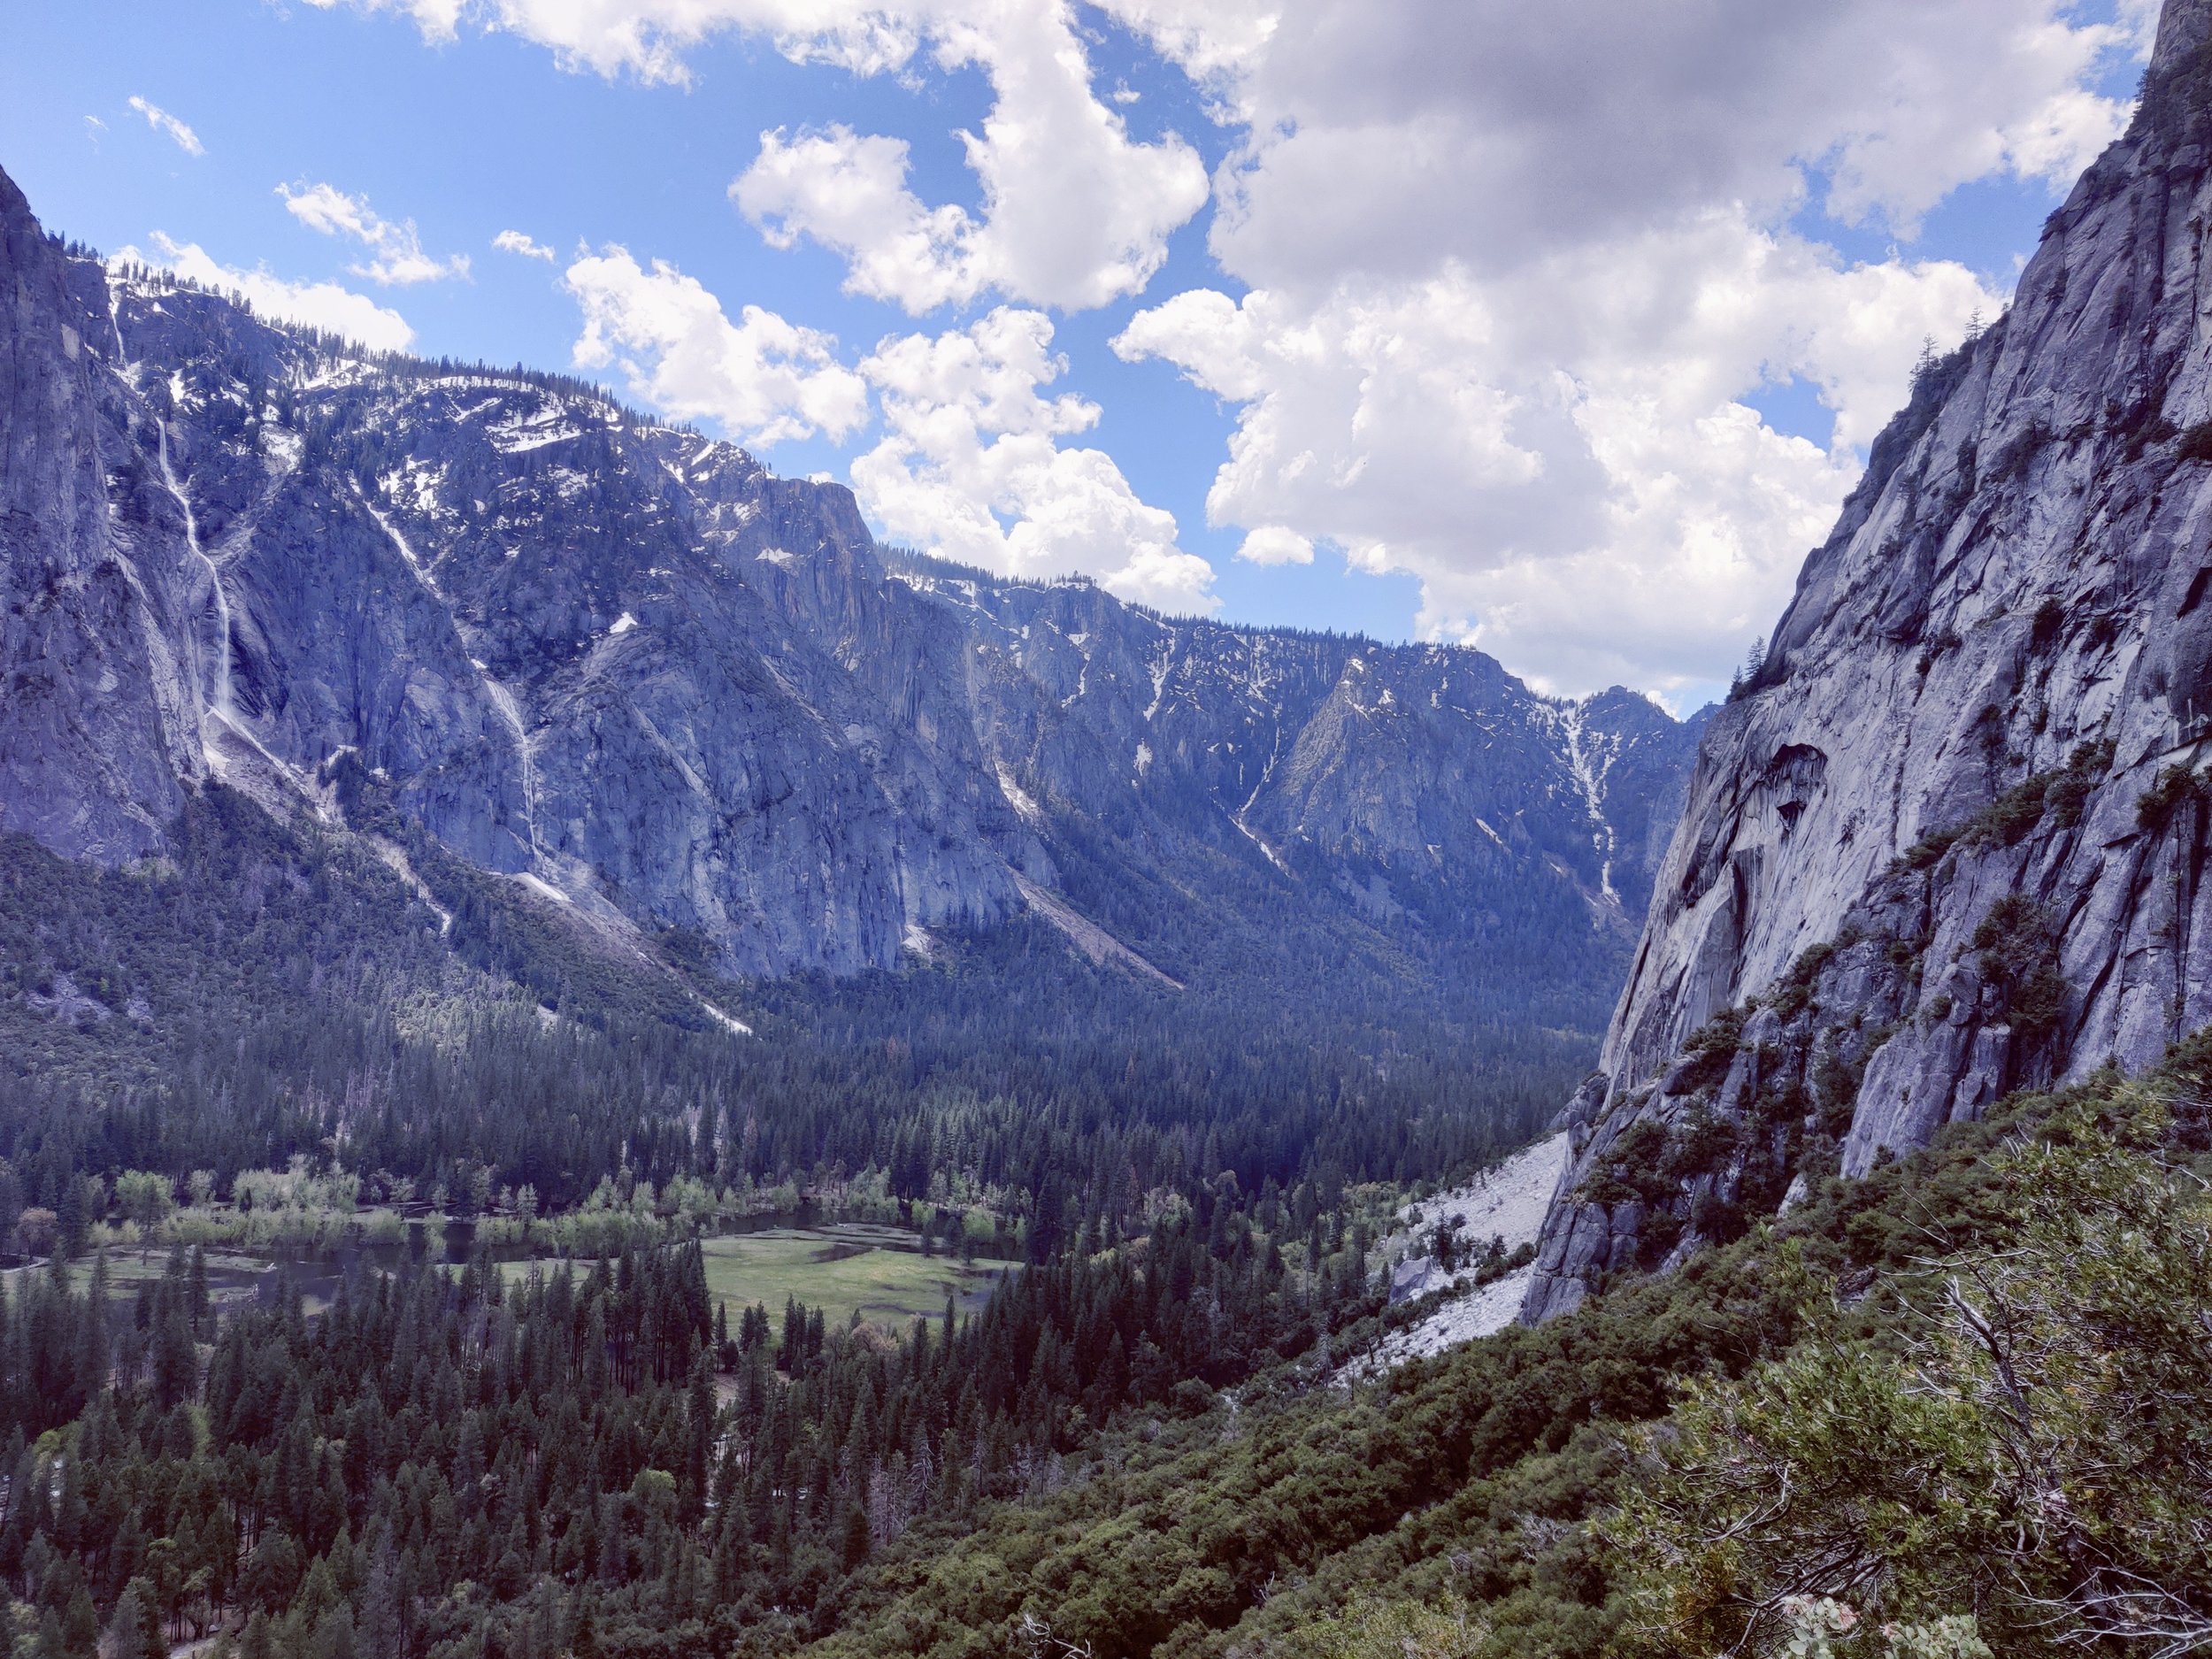 Views of Yosemite Valley